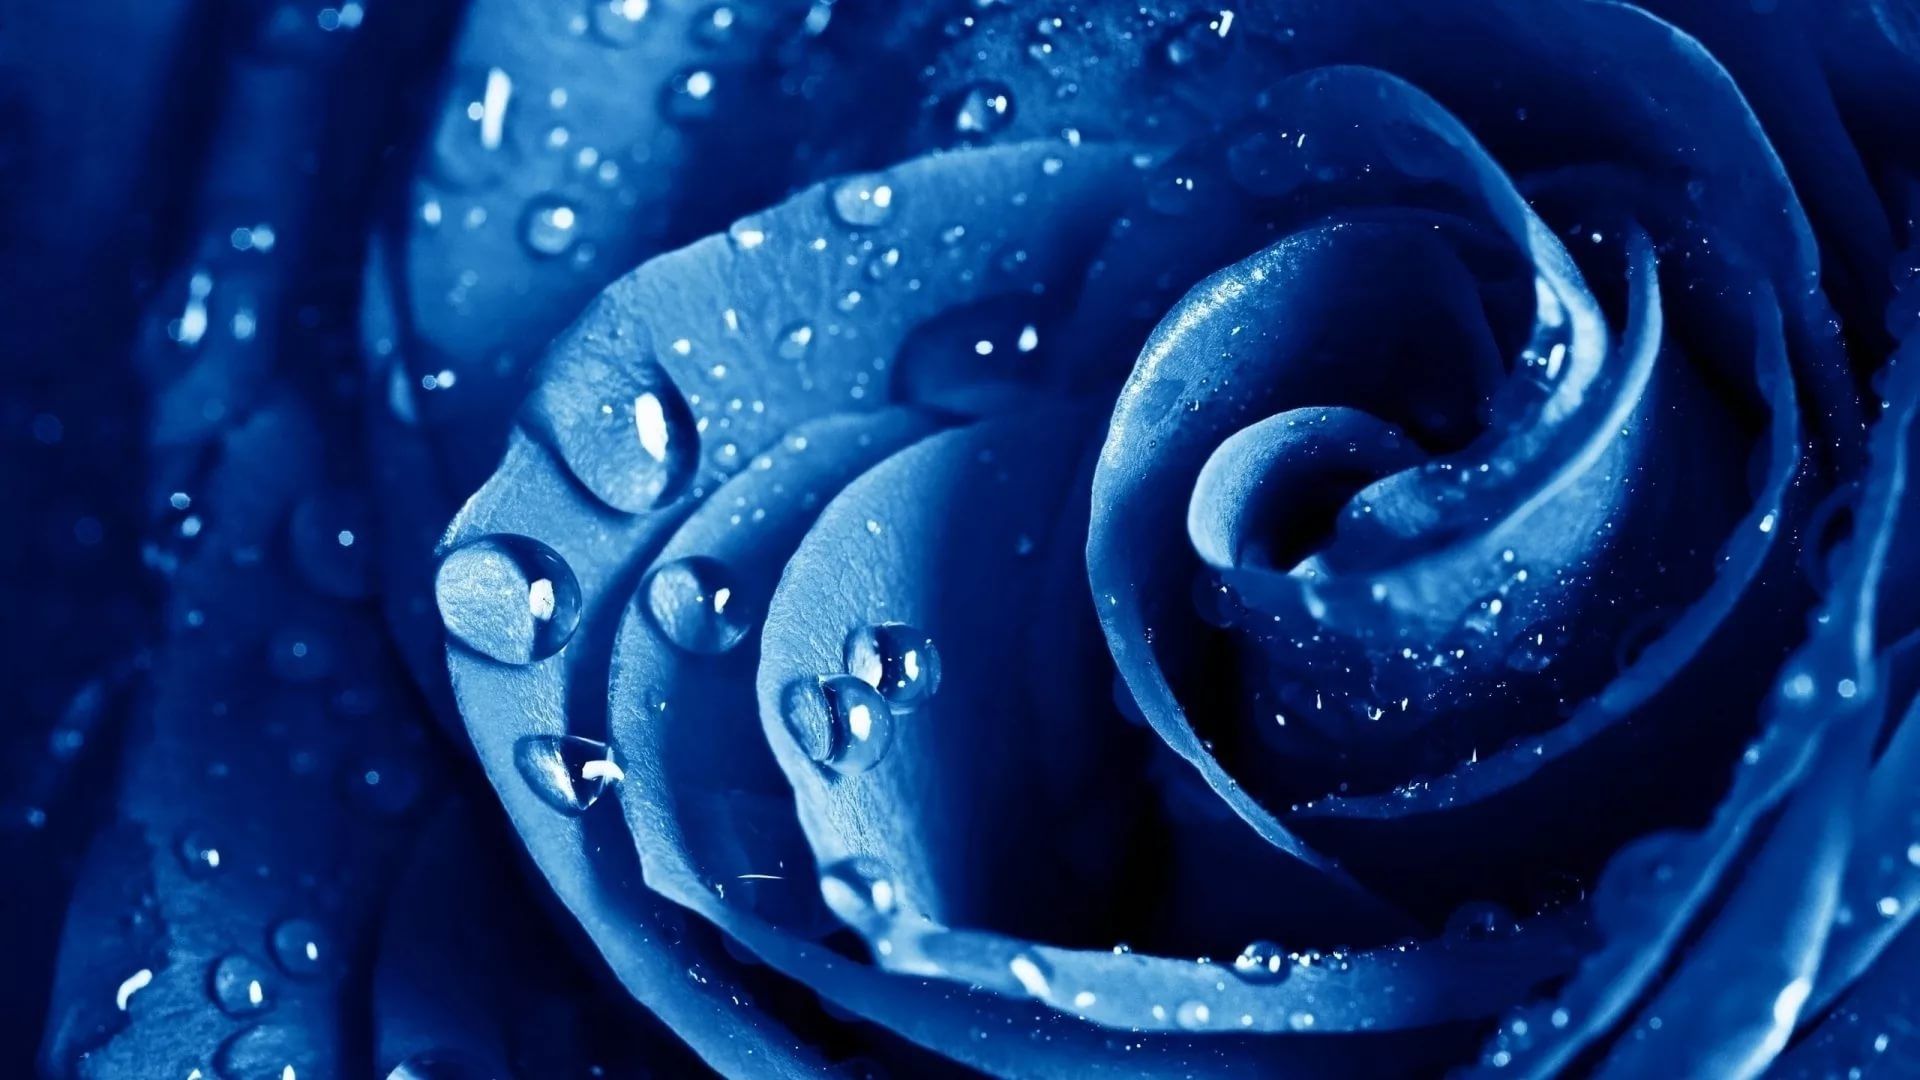 rose wallpaper hd,azul,agua,rosa,rosa azul,humedad